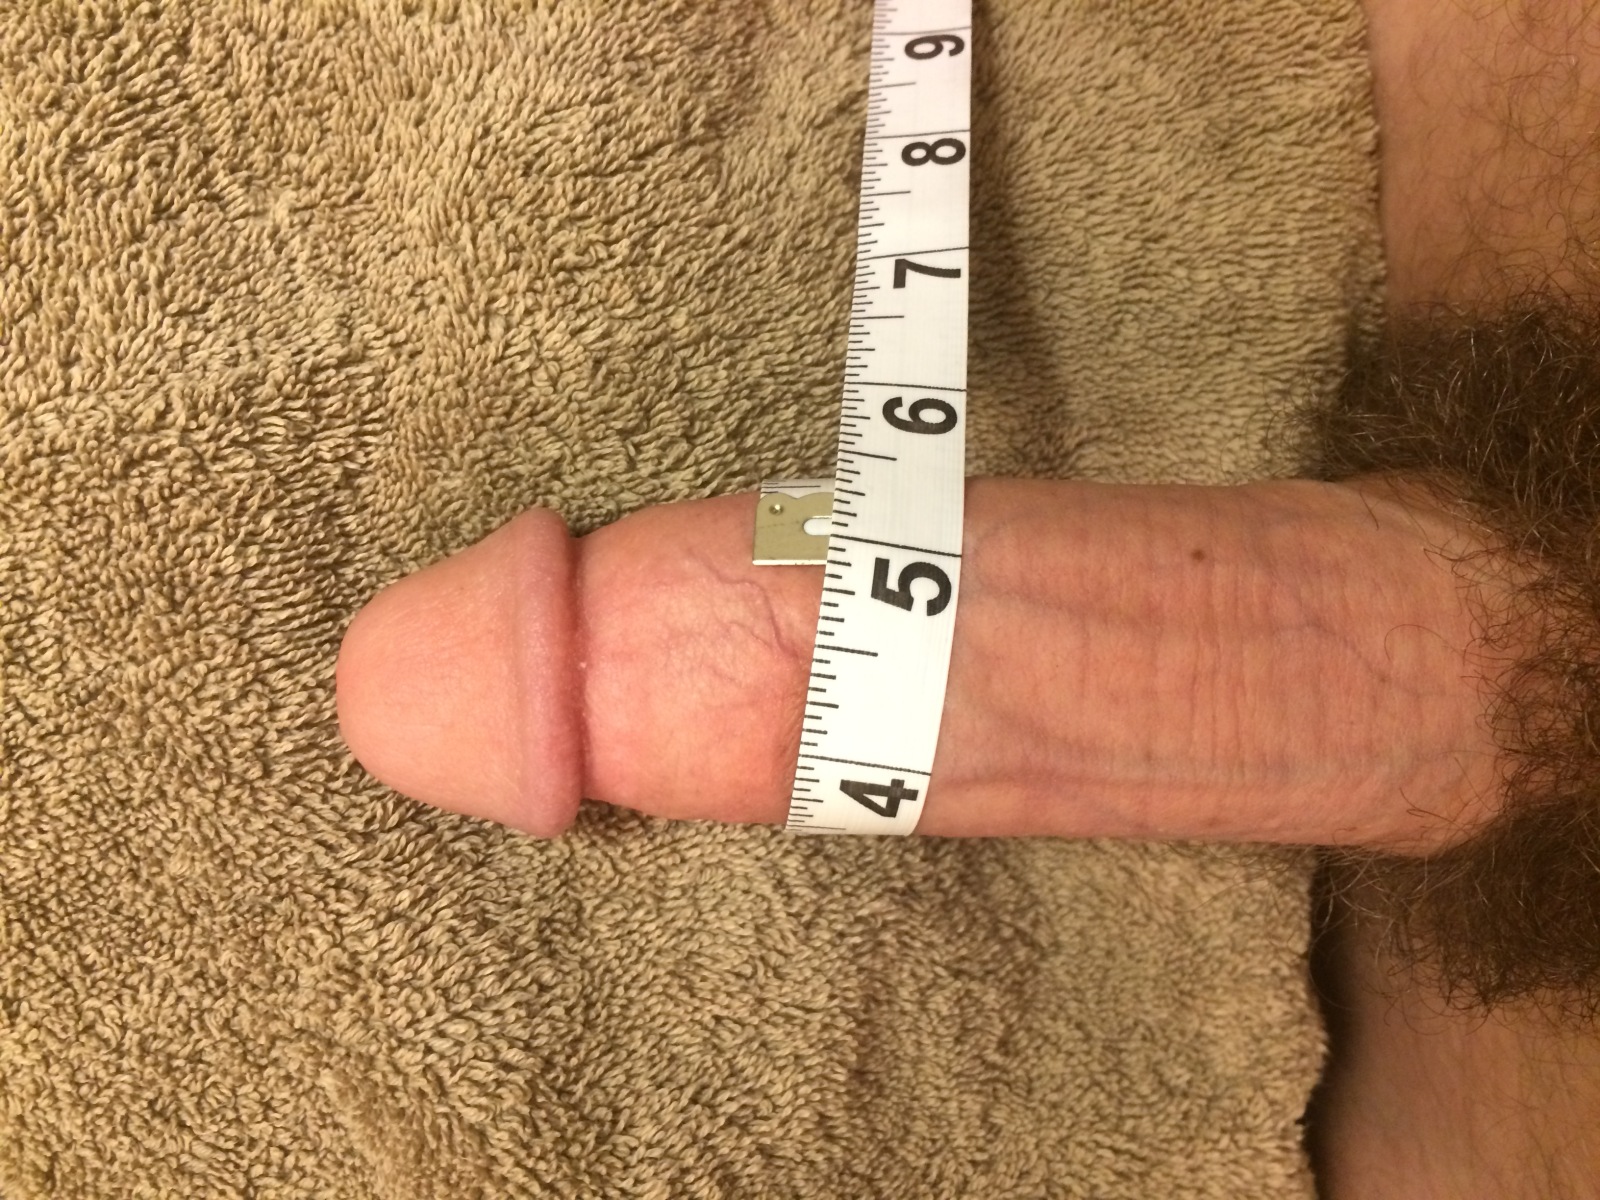 Male porn star penis size | Effidrip.eu